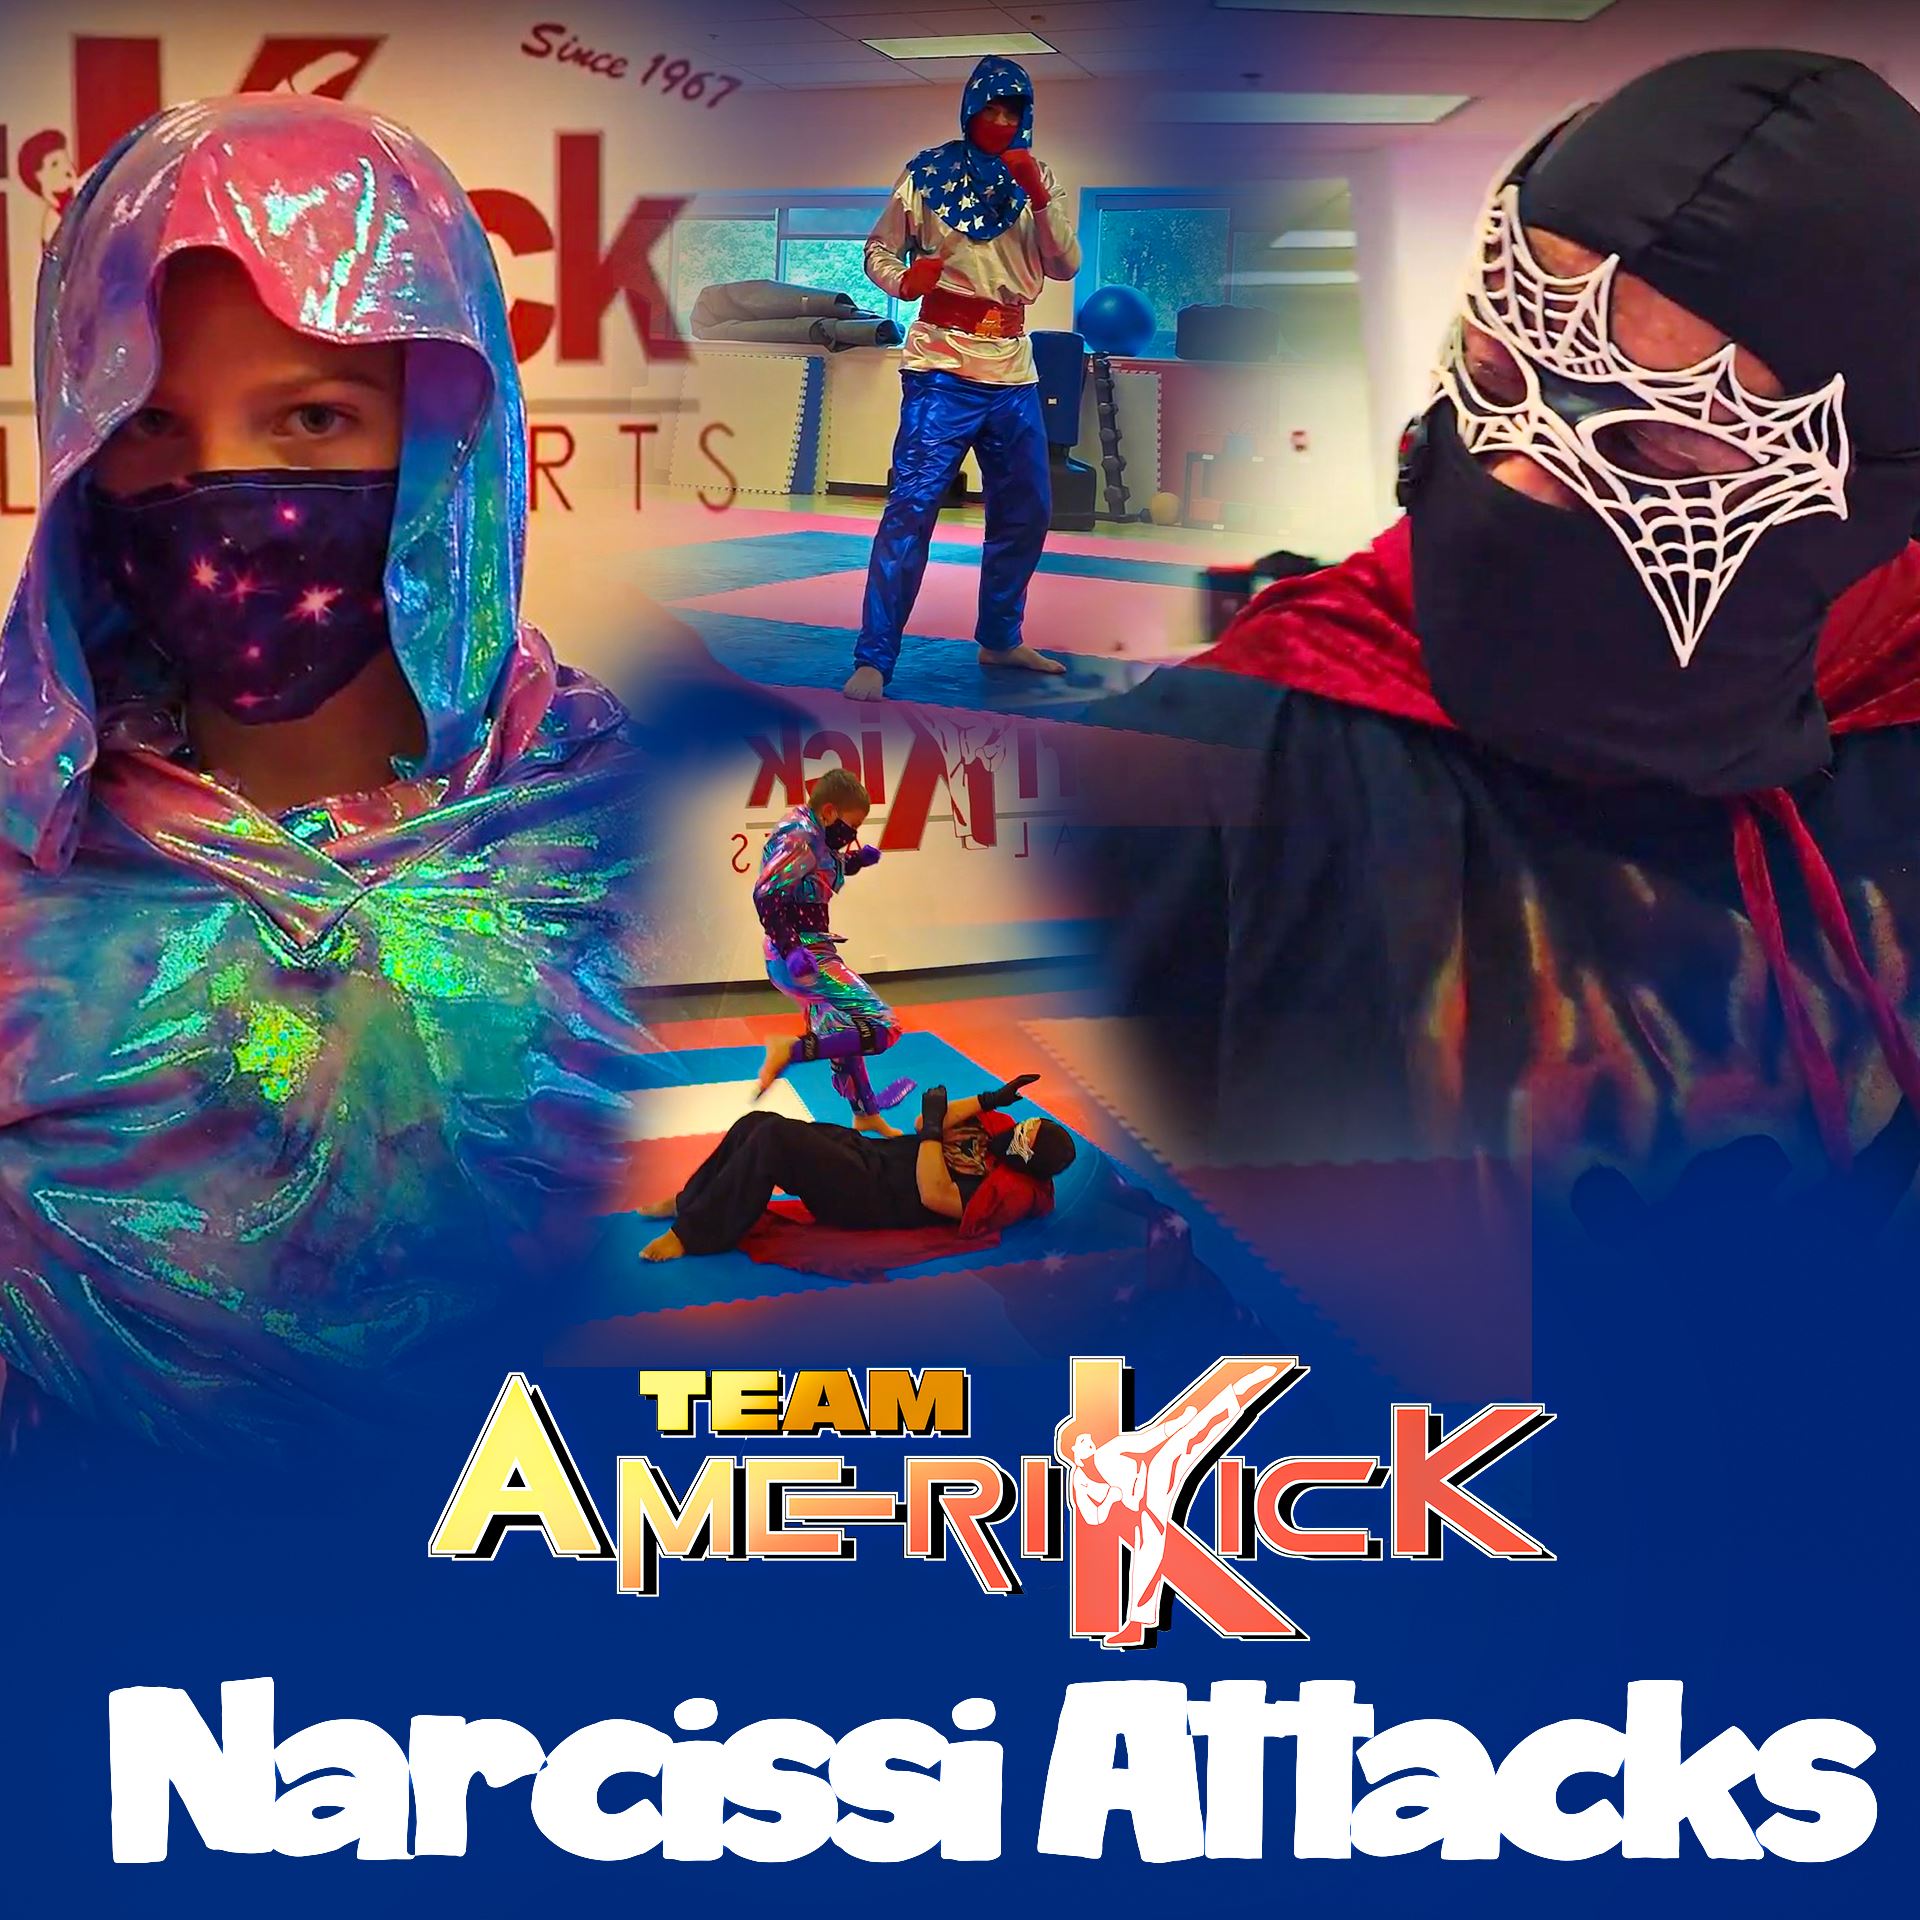 #4: Team Amerikick: NARCISSI ATTACKS!